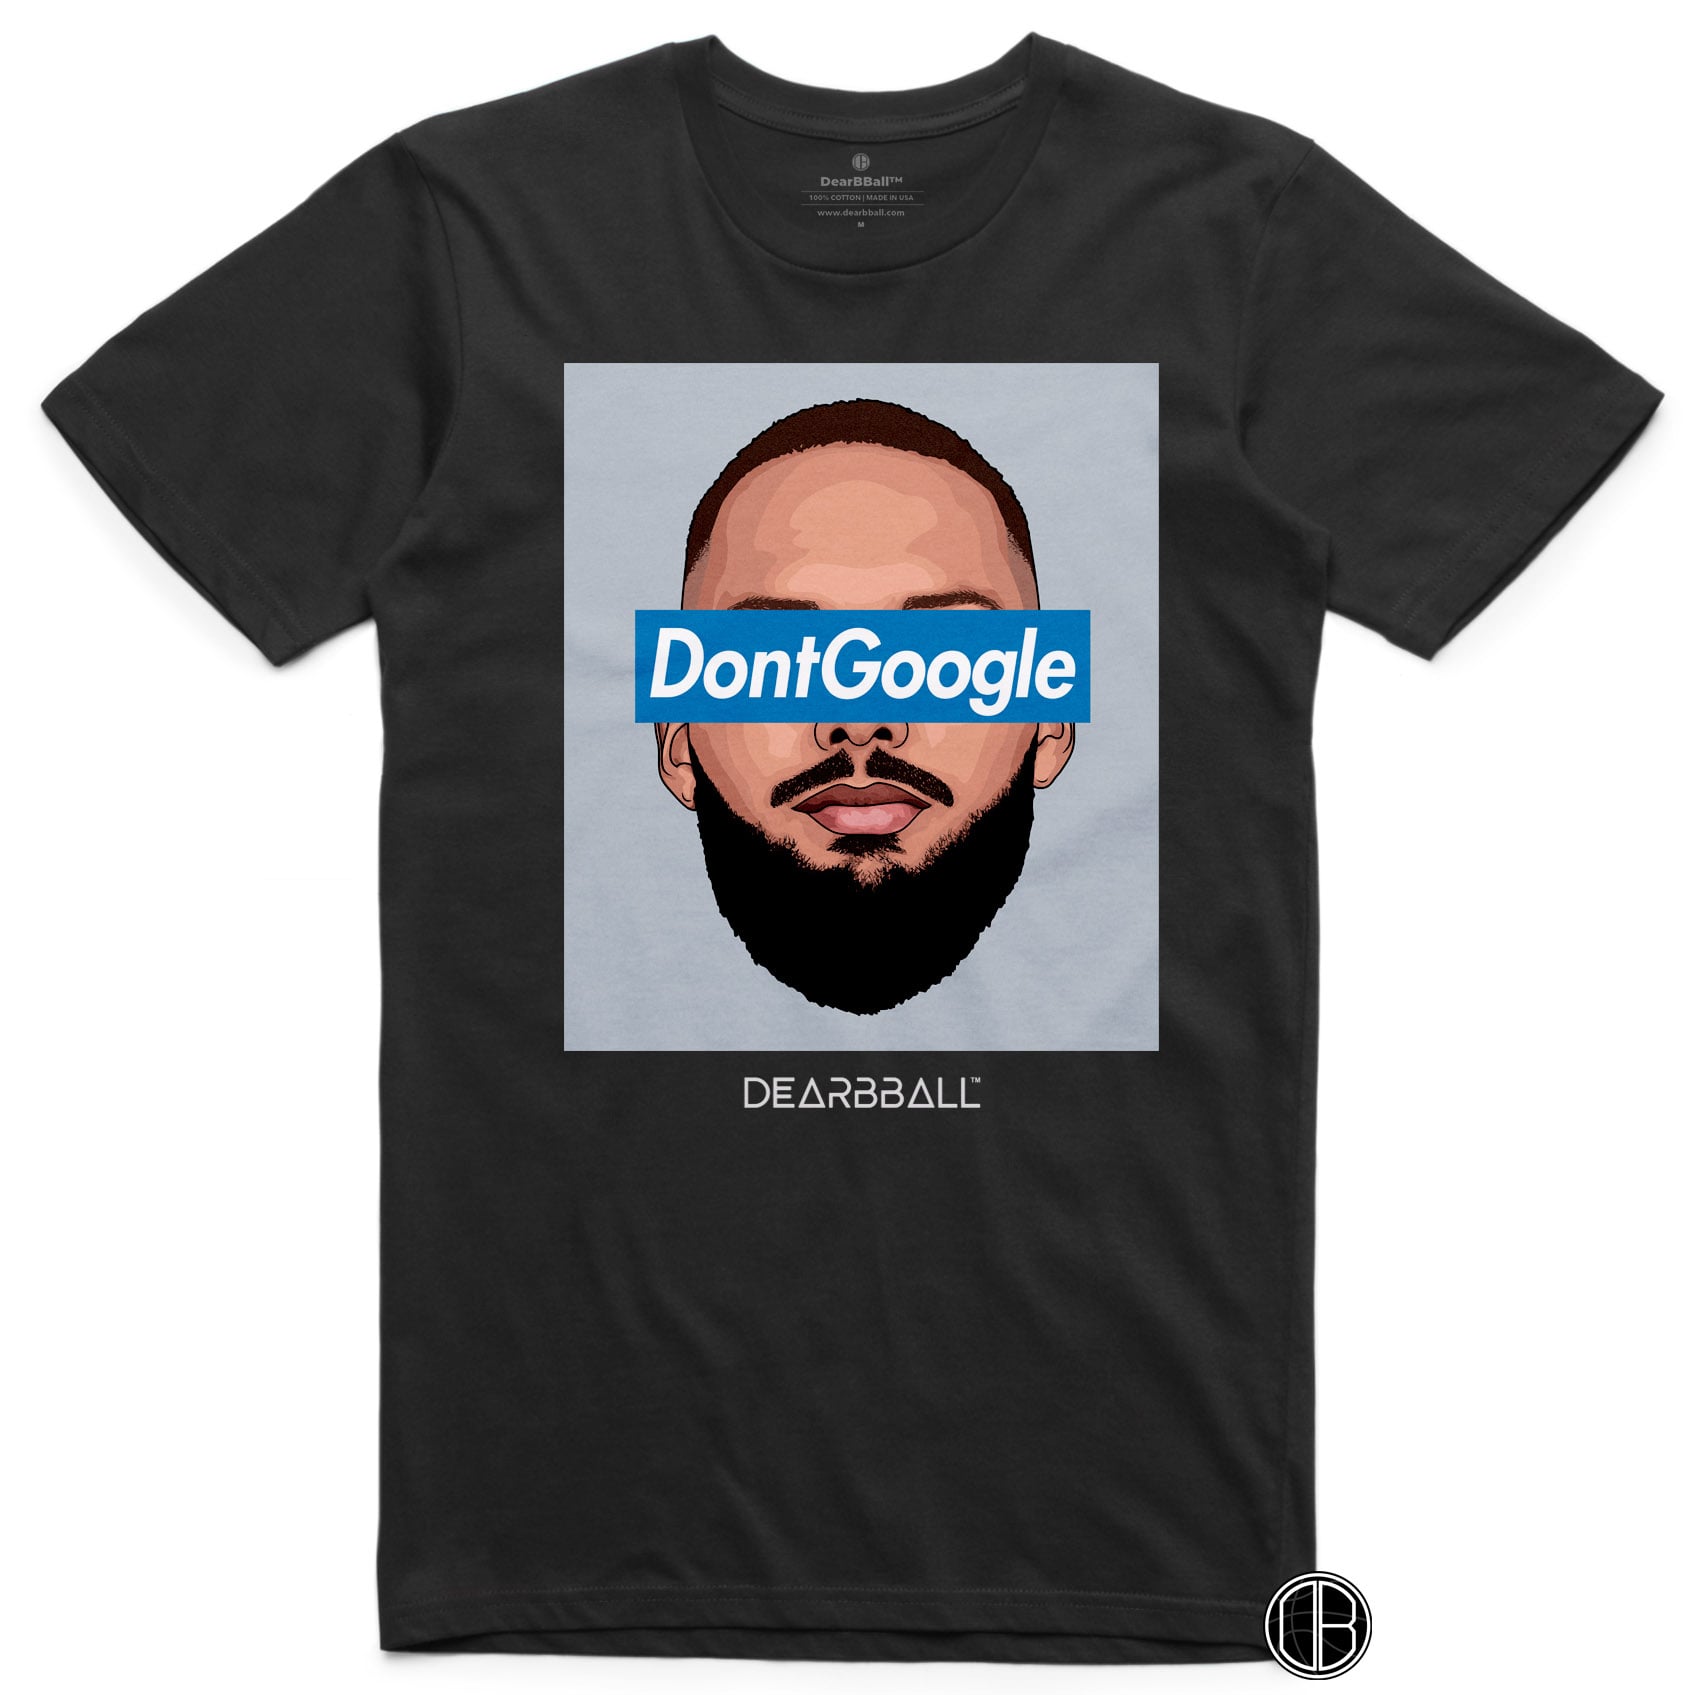 Evan Fournier T-Shirt - DontGoogle Grey Orlando Magic Basketball Dearbball white